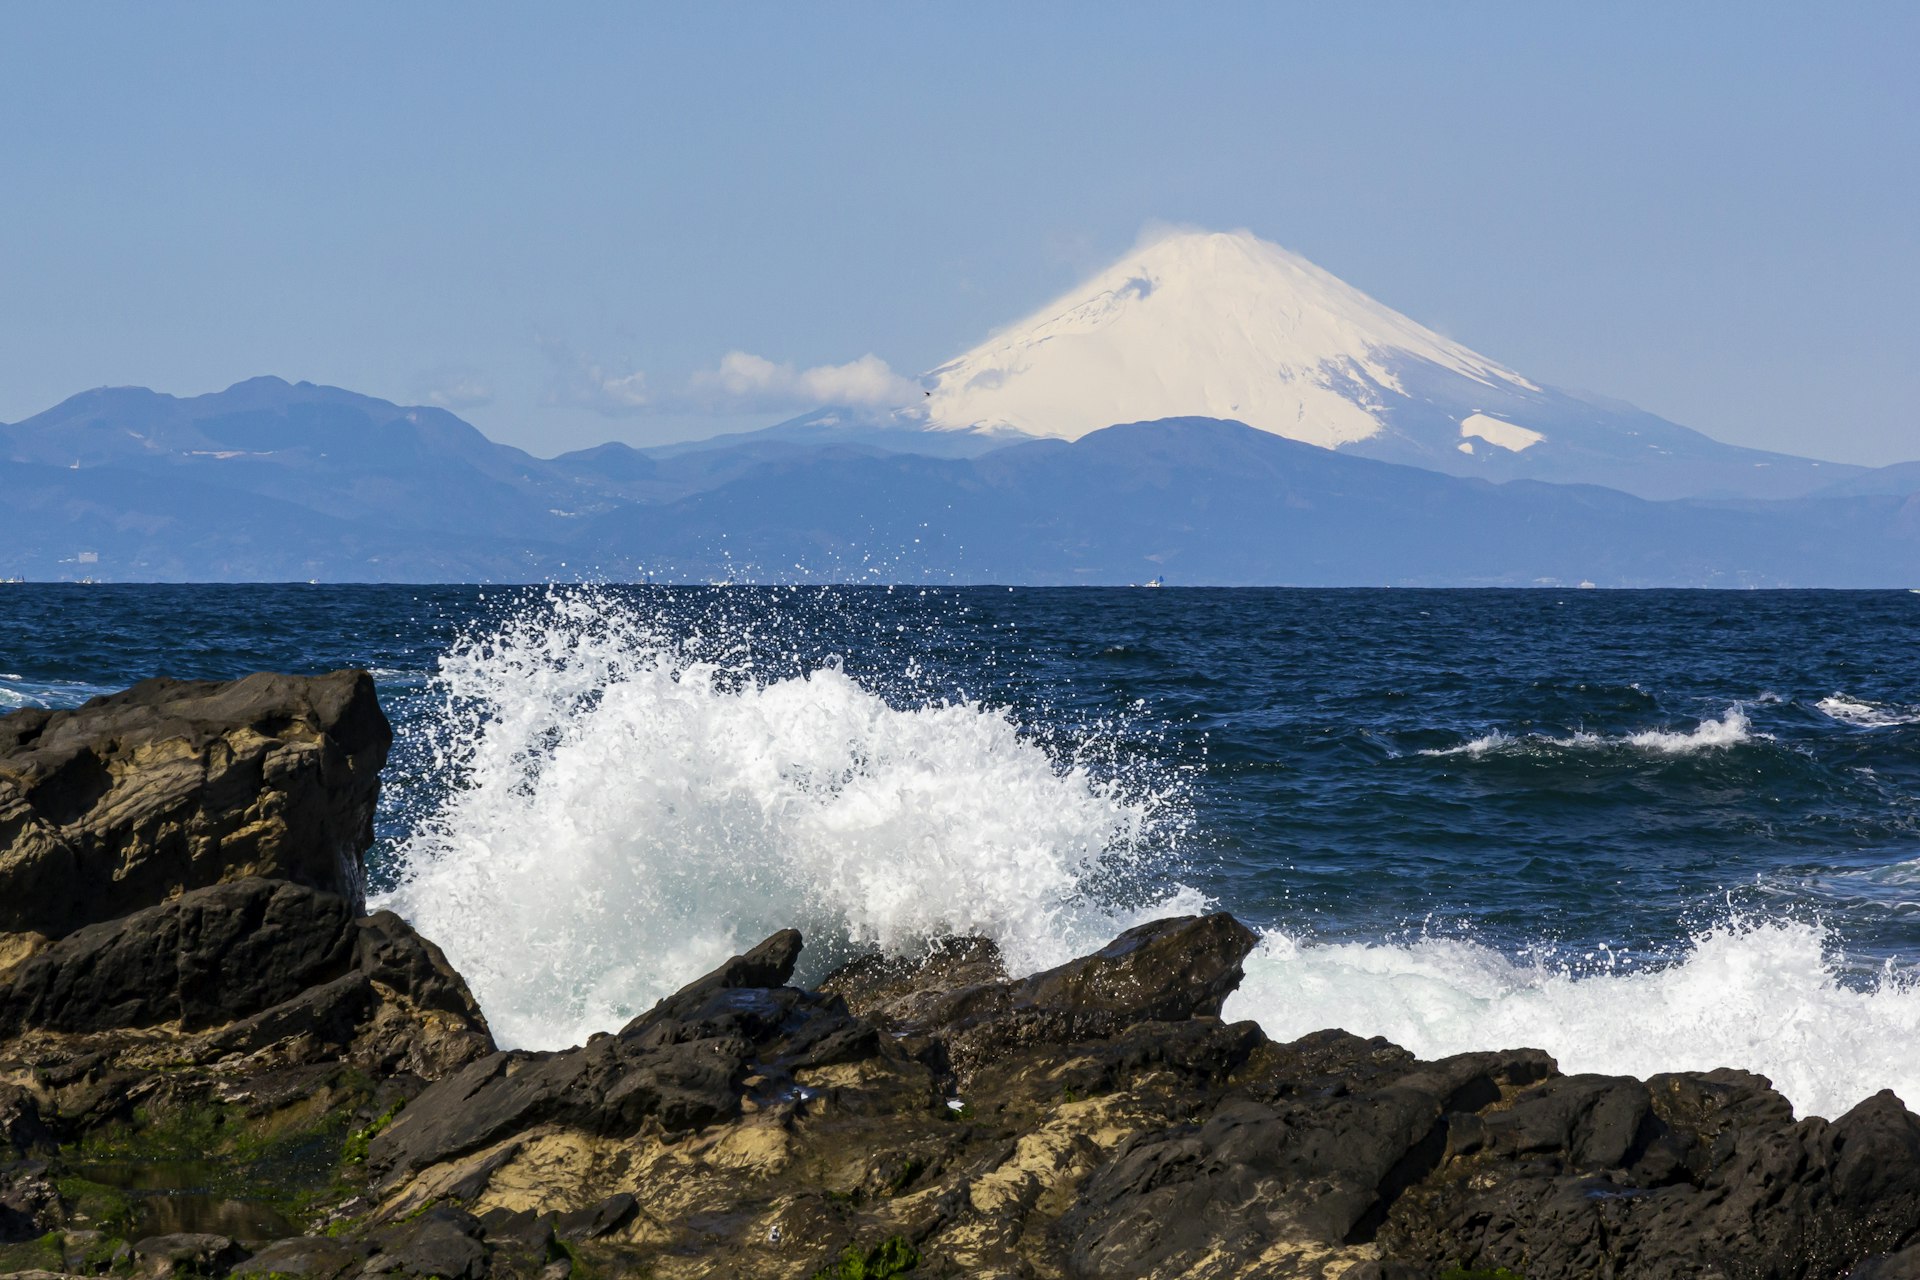 Waves hit Shonan Beach with a view of snow-capped Mt Fuji in the distance, Misaki, Jogashima, Kanagawa, Japan